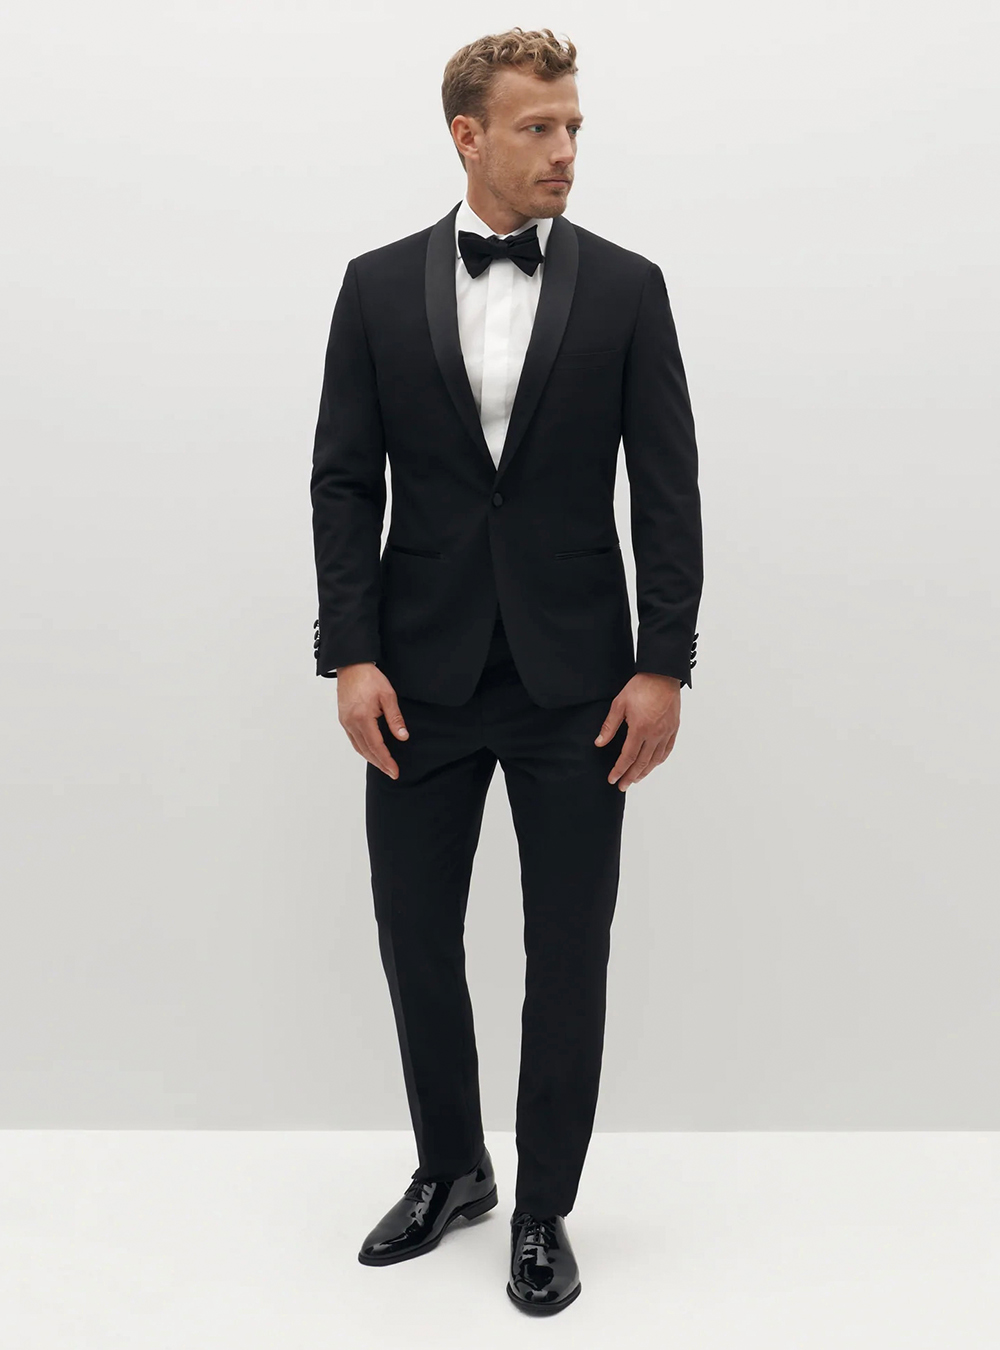 Black tuxedo, white shirt, and black patent leather wholecut Oxfords